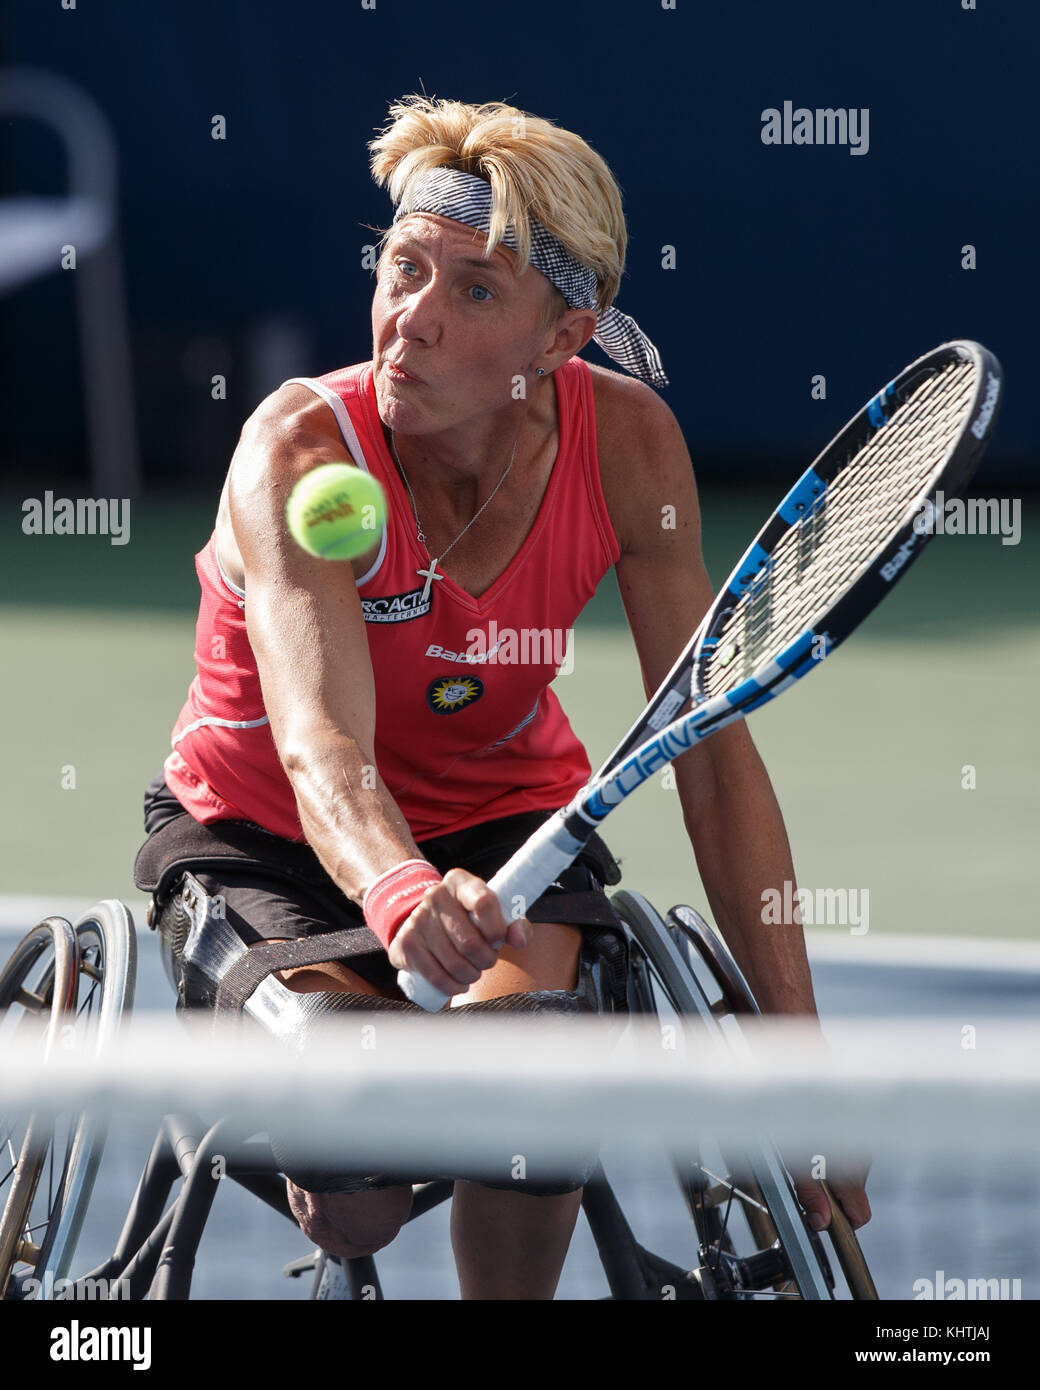 German tennis player Sabine Ellerbrock plays a backhand shot in Wheelchair  Singles match at US Open 2017 Tennis Championship, New York City, New York  Stock Photo - Alamy